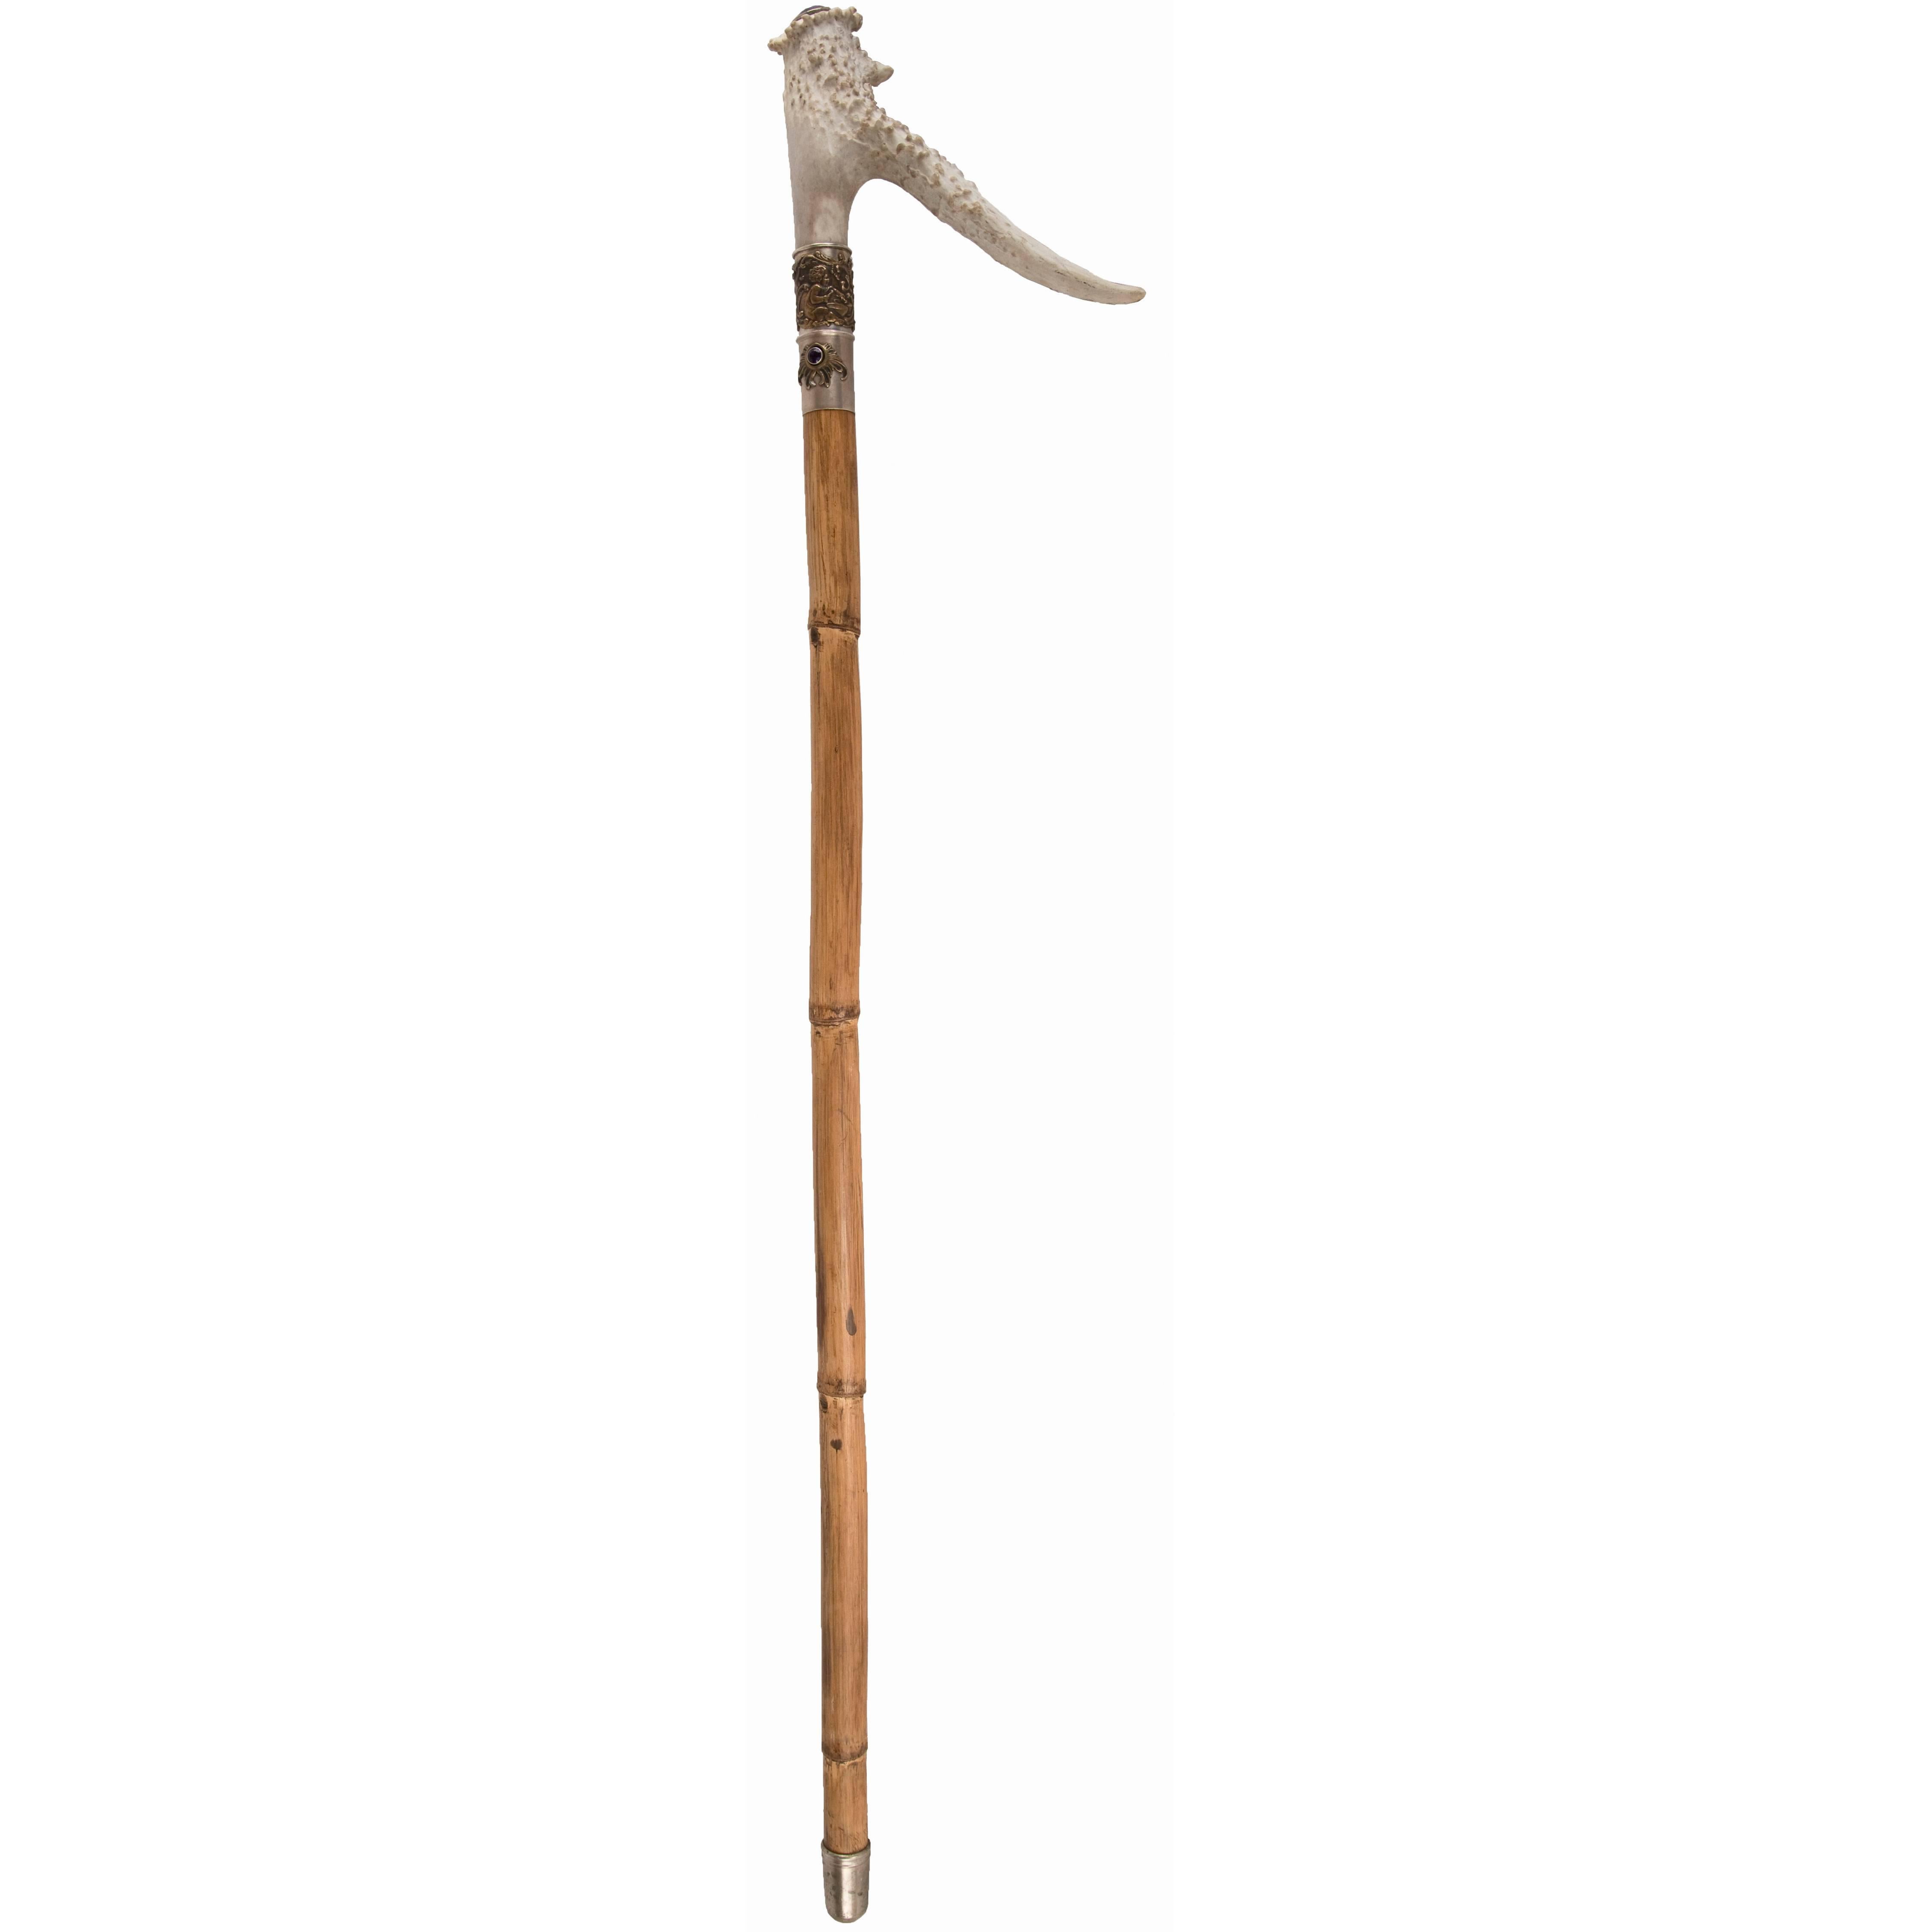 Bespoke Antler and Bamboo Sword-Cane